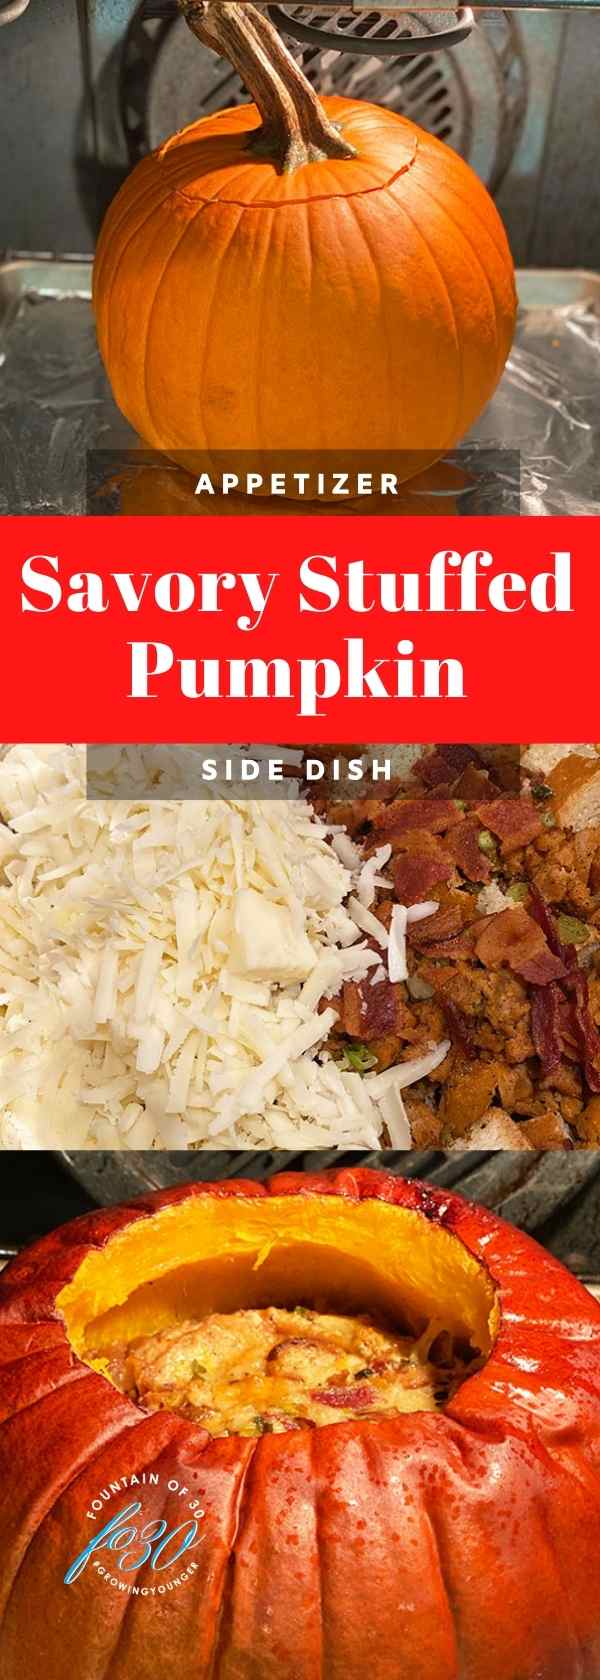 savory stuffed pumpkin appetizer or side dish fountainof30